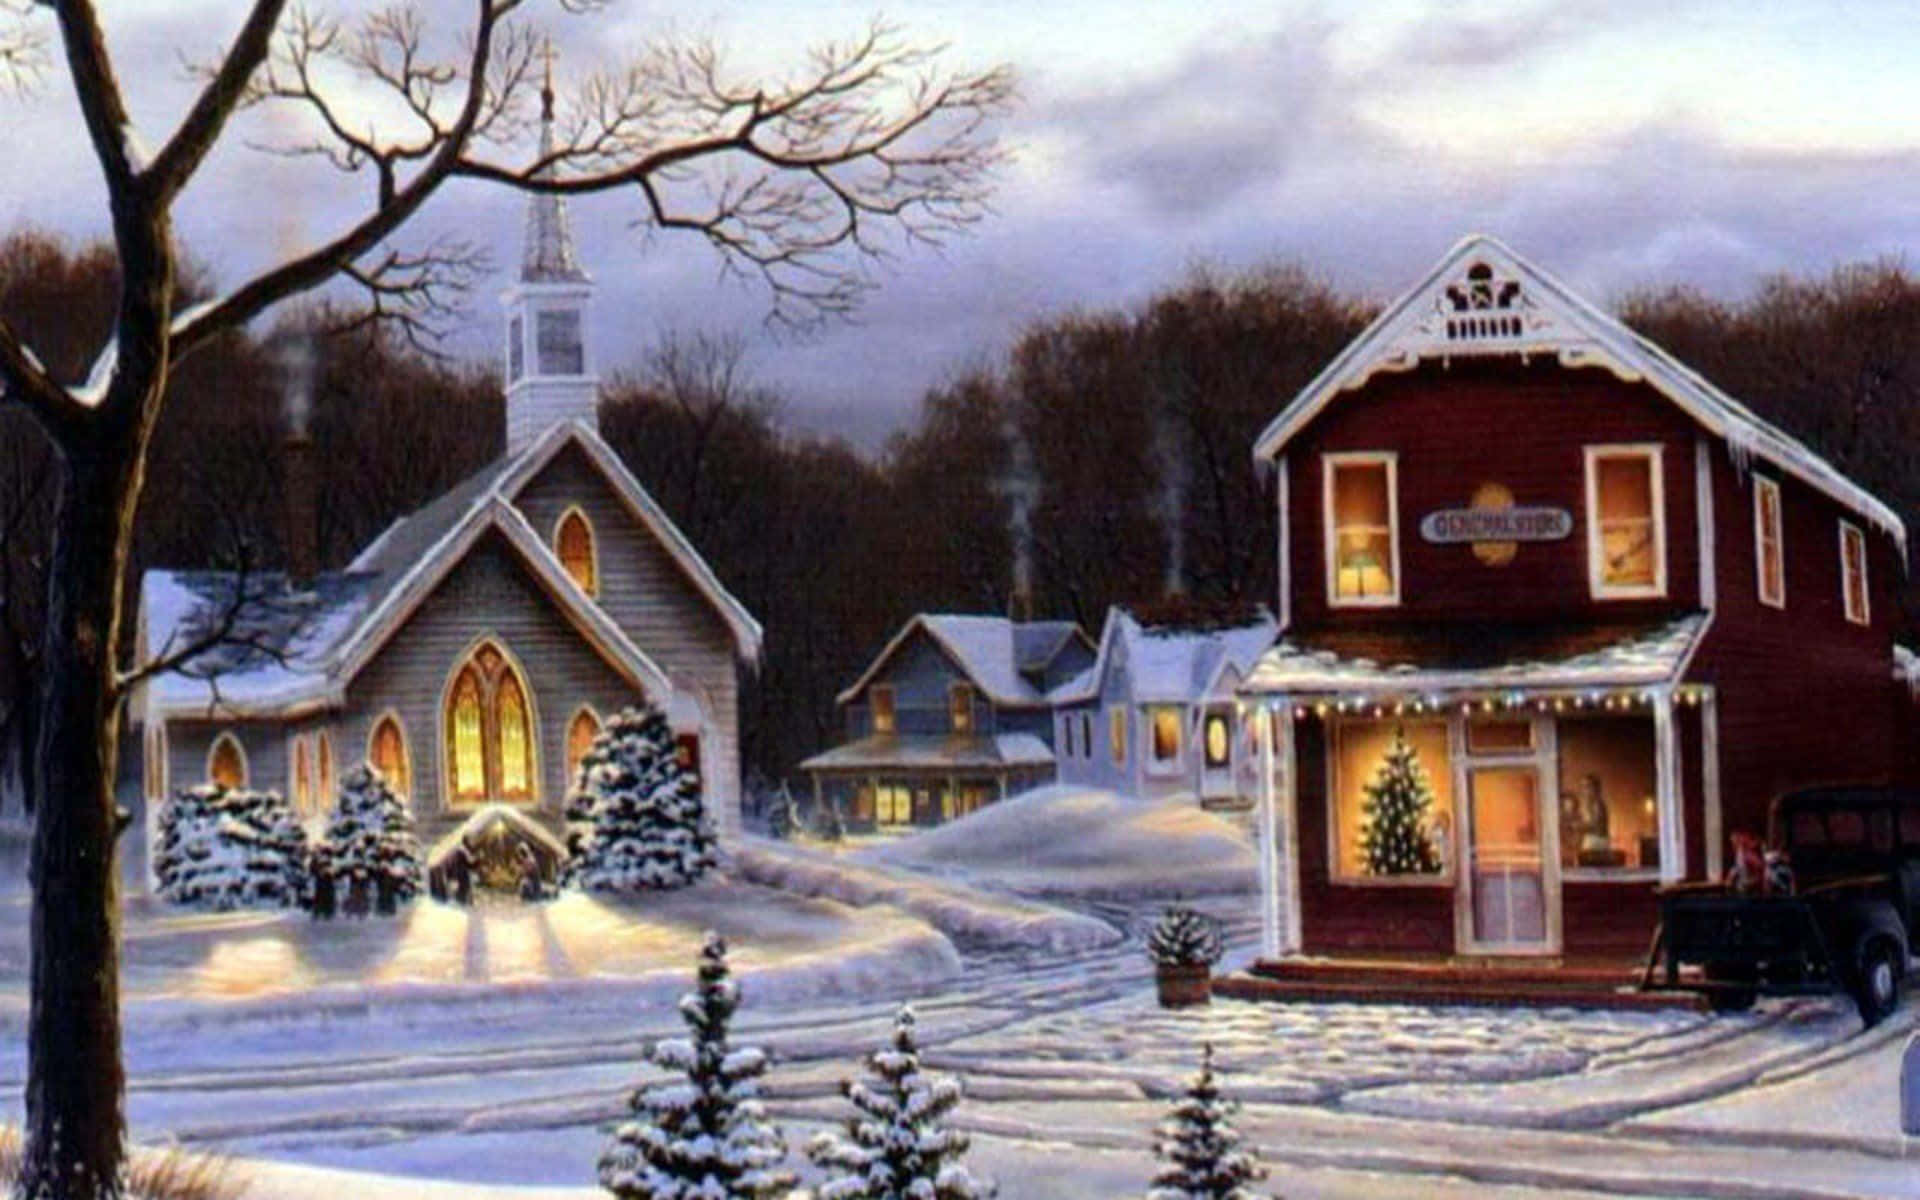 Enchanting Snowy Village in Winter Wallpaper